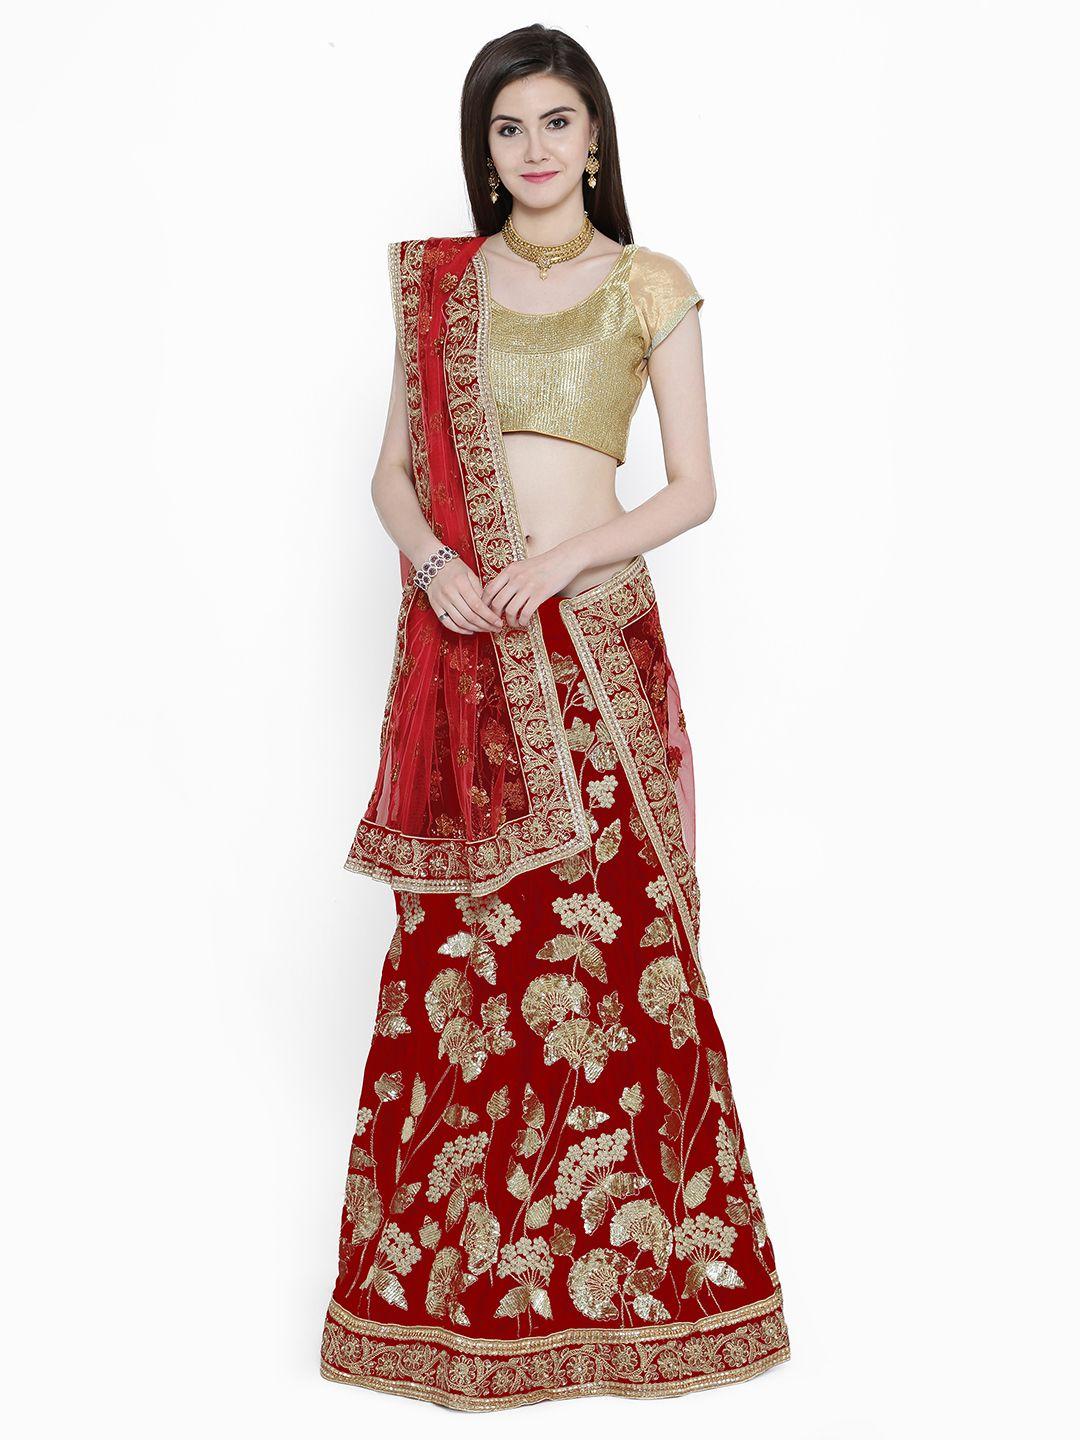 chhabra 555 red & gold-toned embellished semi-stitched lehenga & unstitched blouse with dupatta